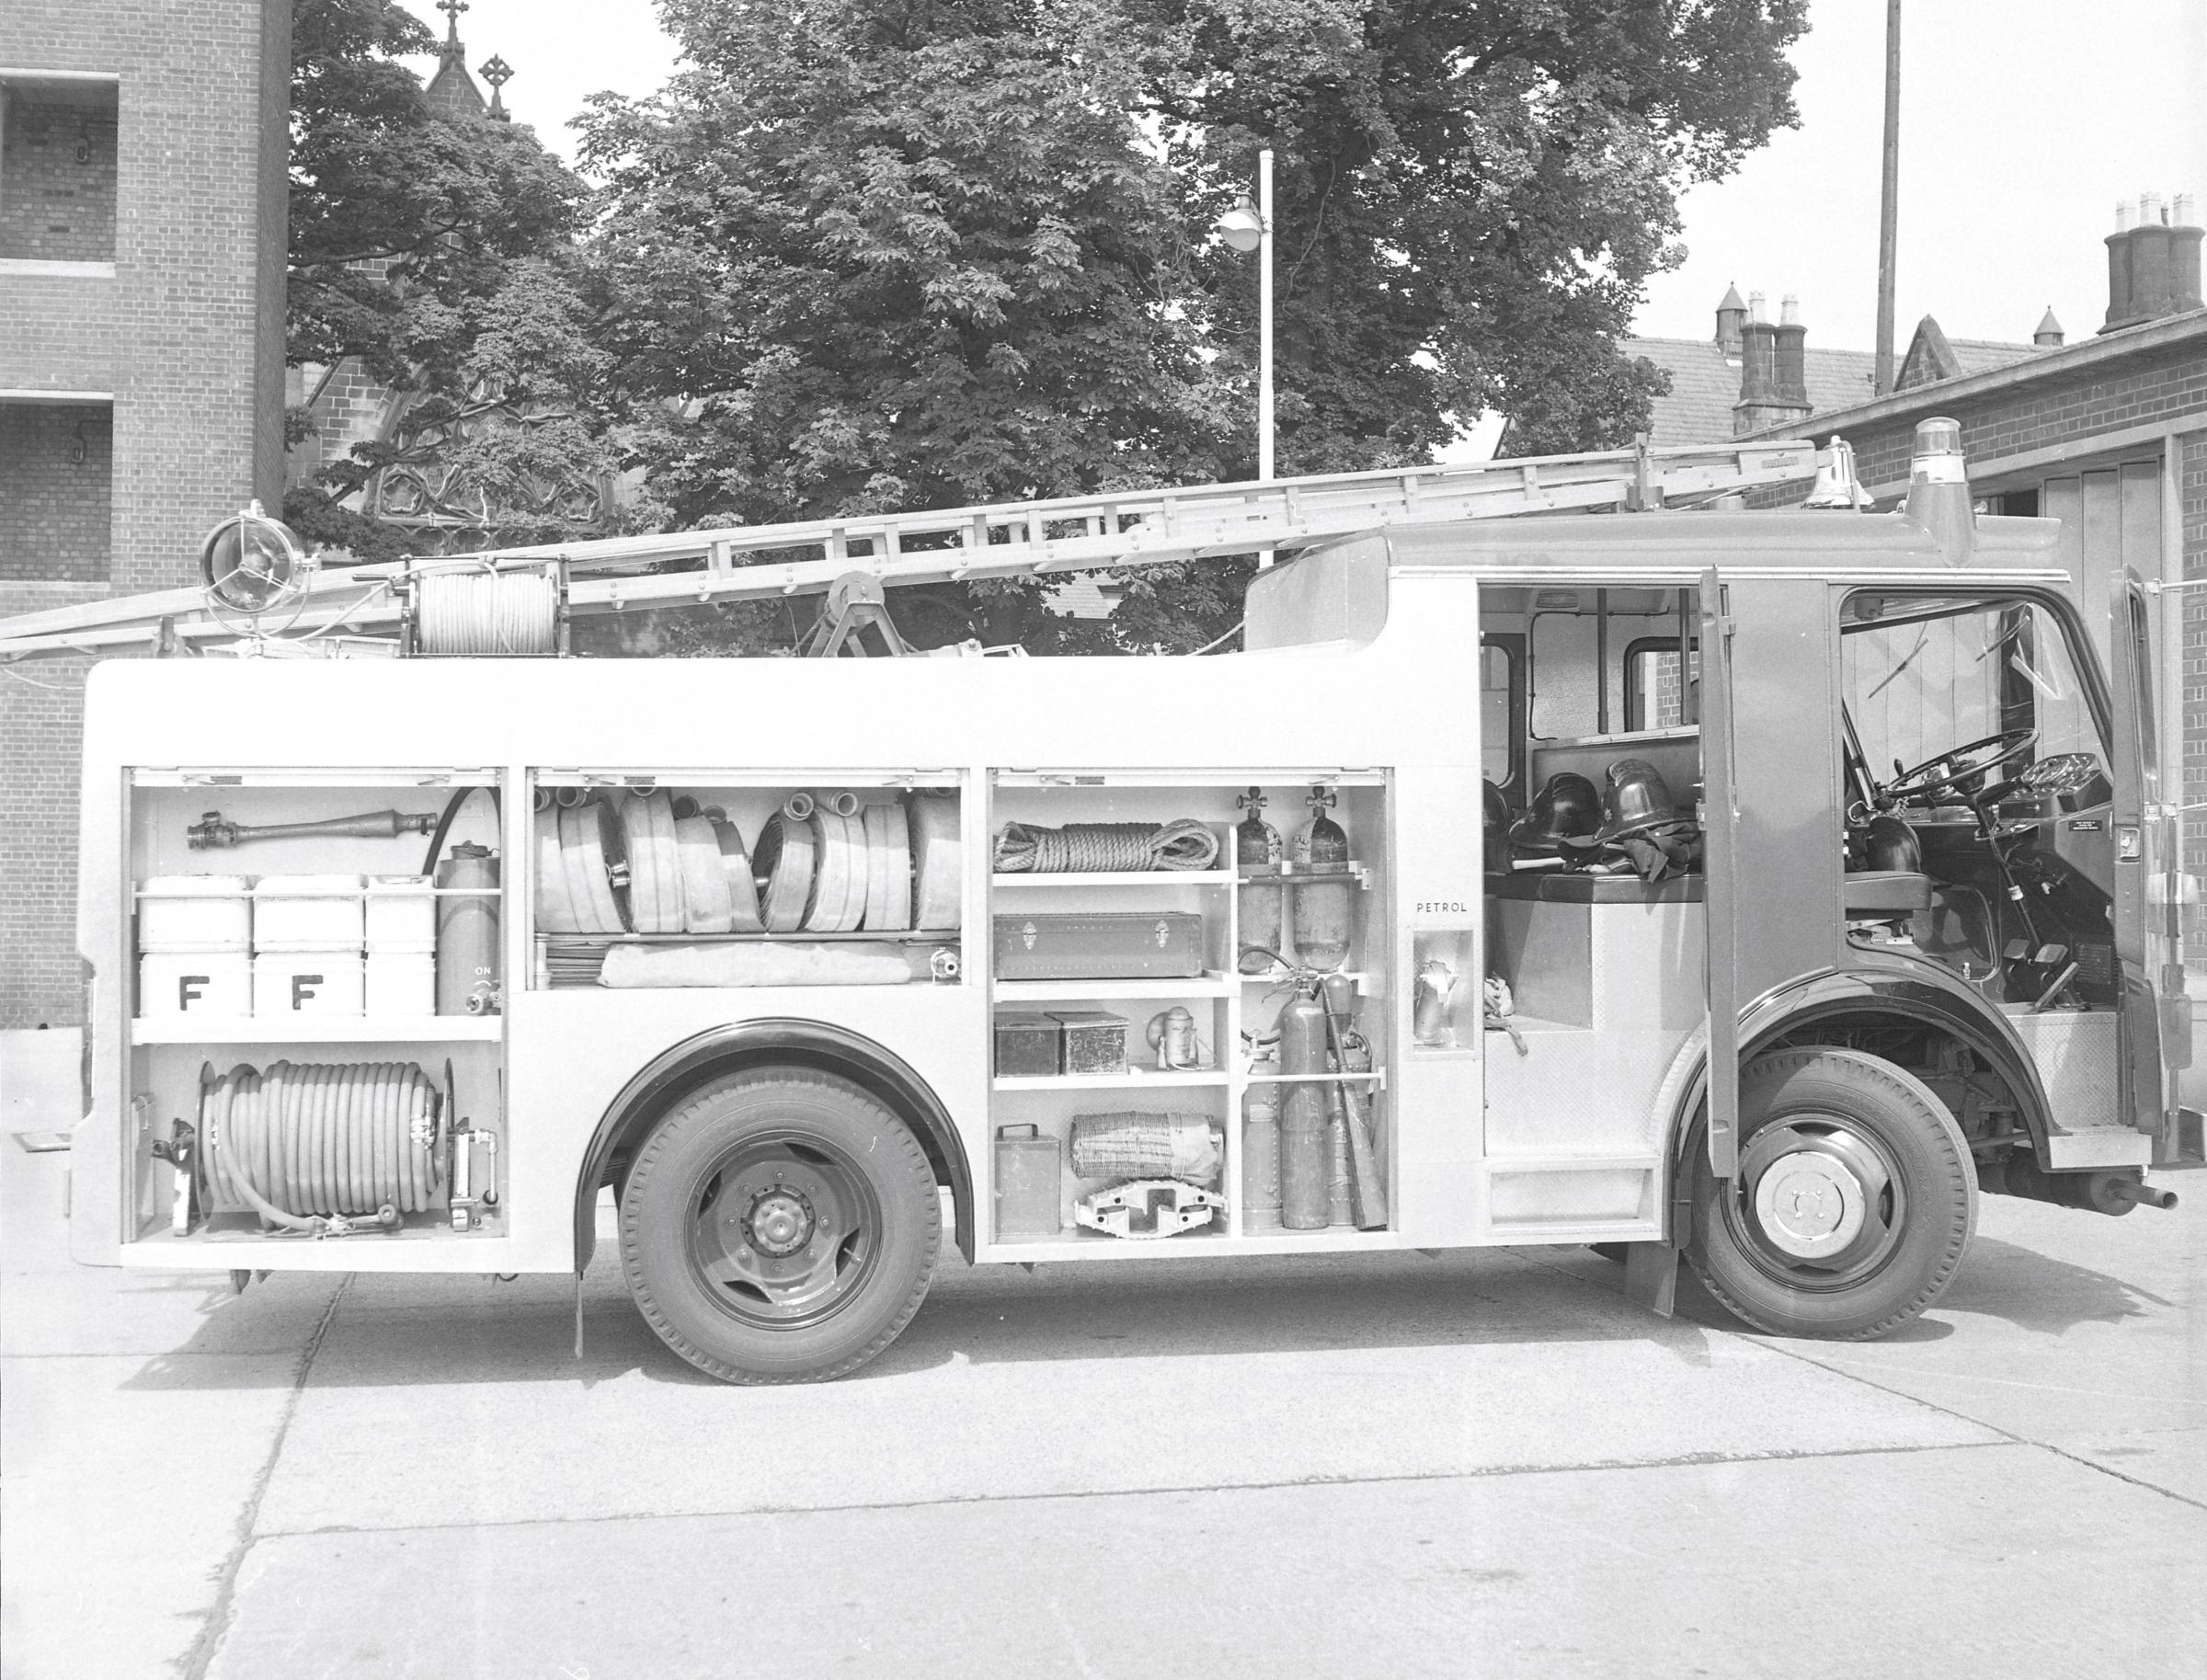 New Dennis fire engine at Wrexham Fire Station, 1969.